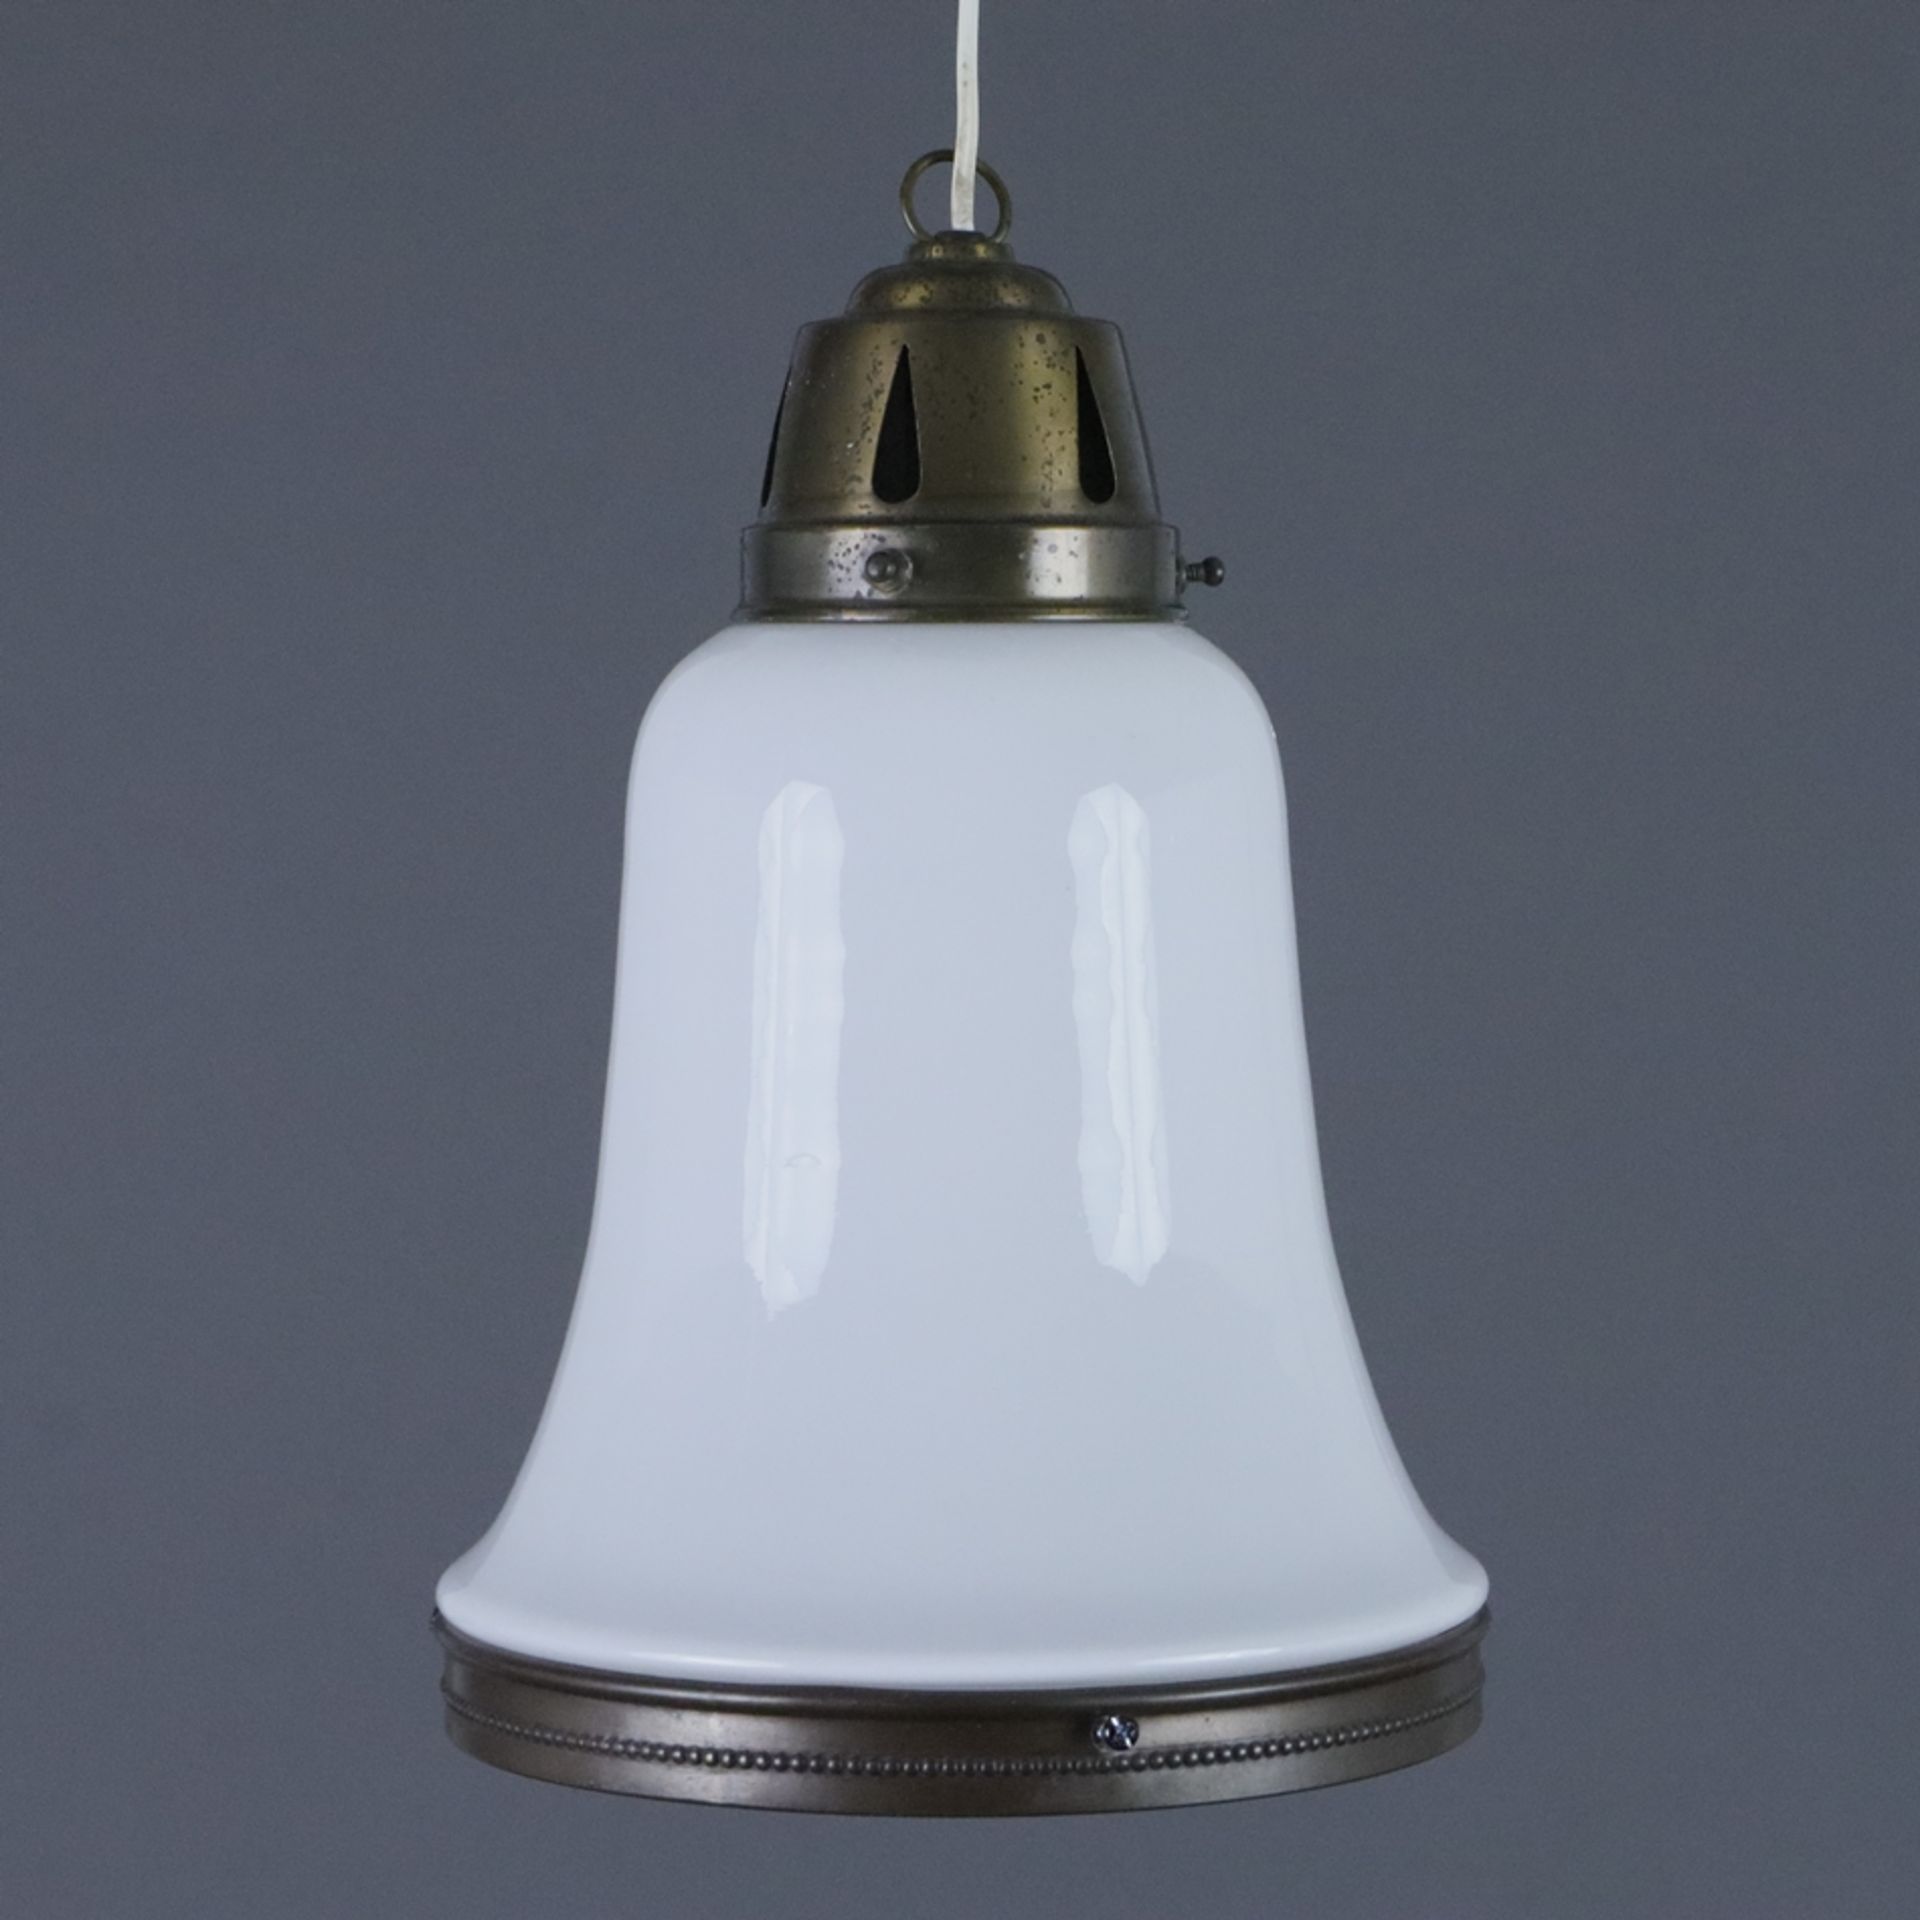 Jugendstil-Deckenlampe - Anfang 20. Jh., glockenförmiger Glas-Schirm mit opalweißem Unterfang, Meta